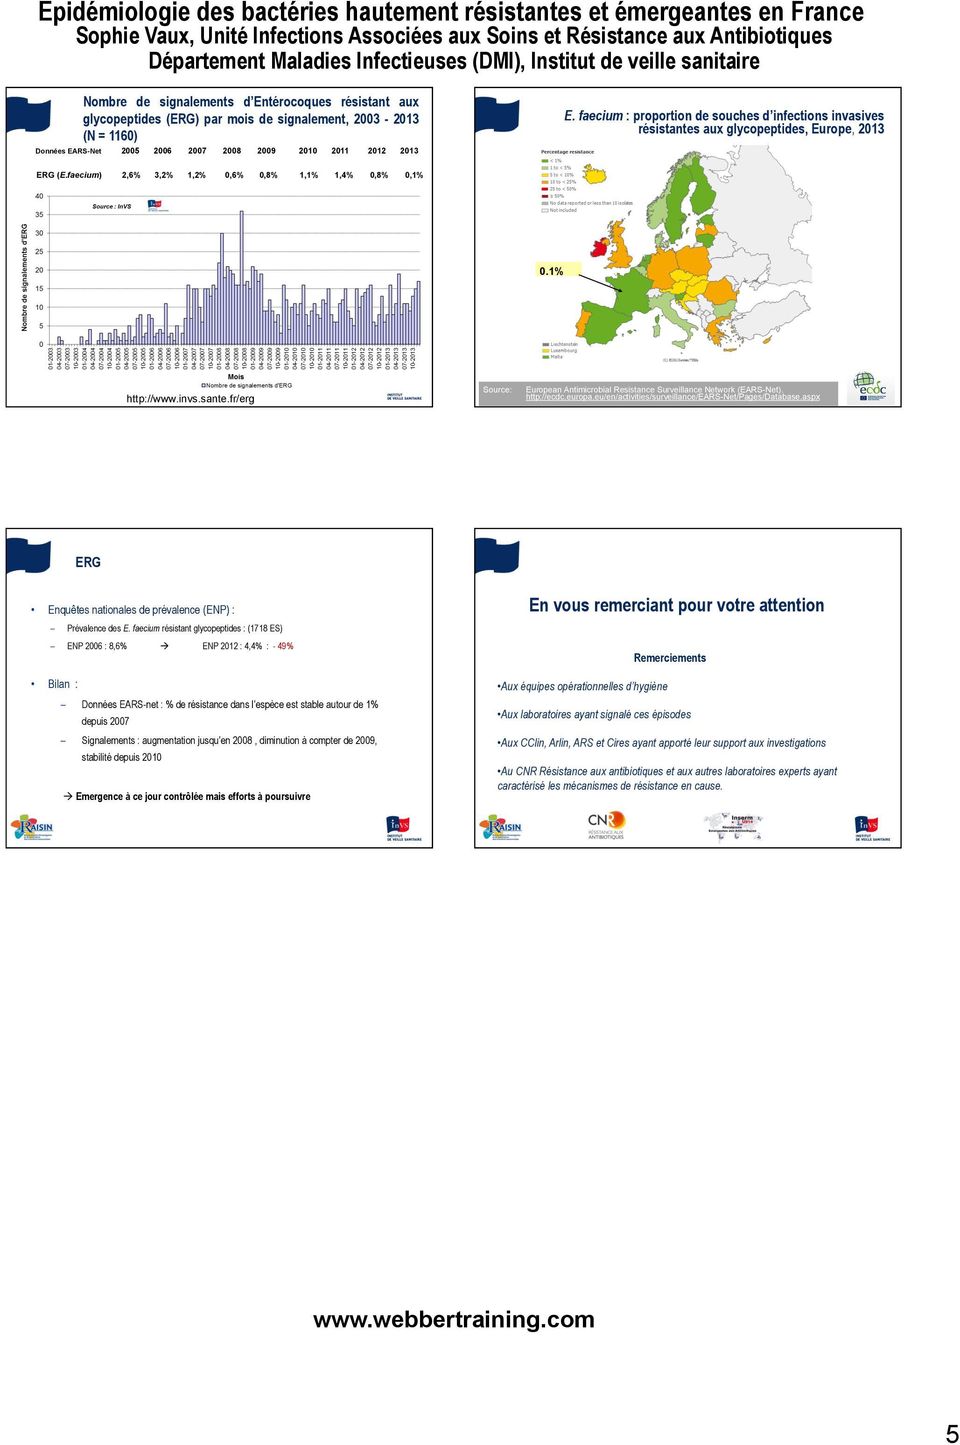 invs.sante.fr/erg Source: European Antimicrobial Resistance Surveillance Network (EARS-Net). http://ecdc.europa.eu/en/activities/surveillance/ears-net/pages/database.